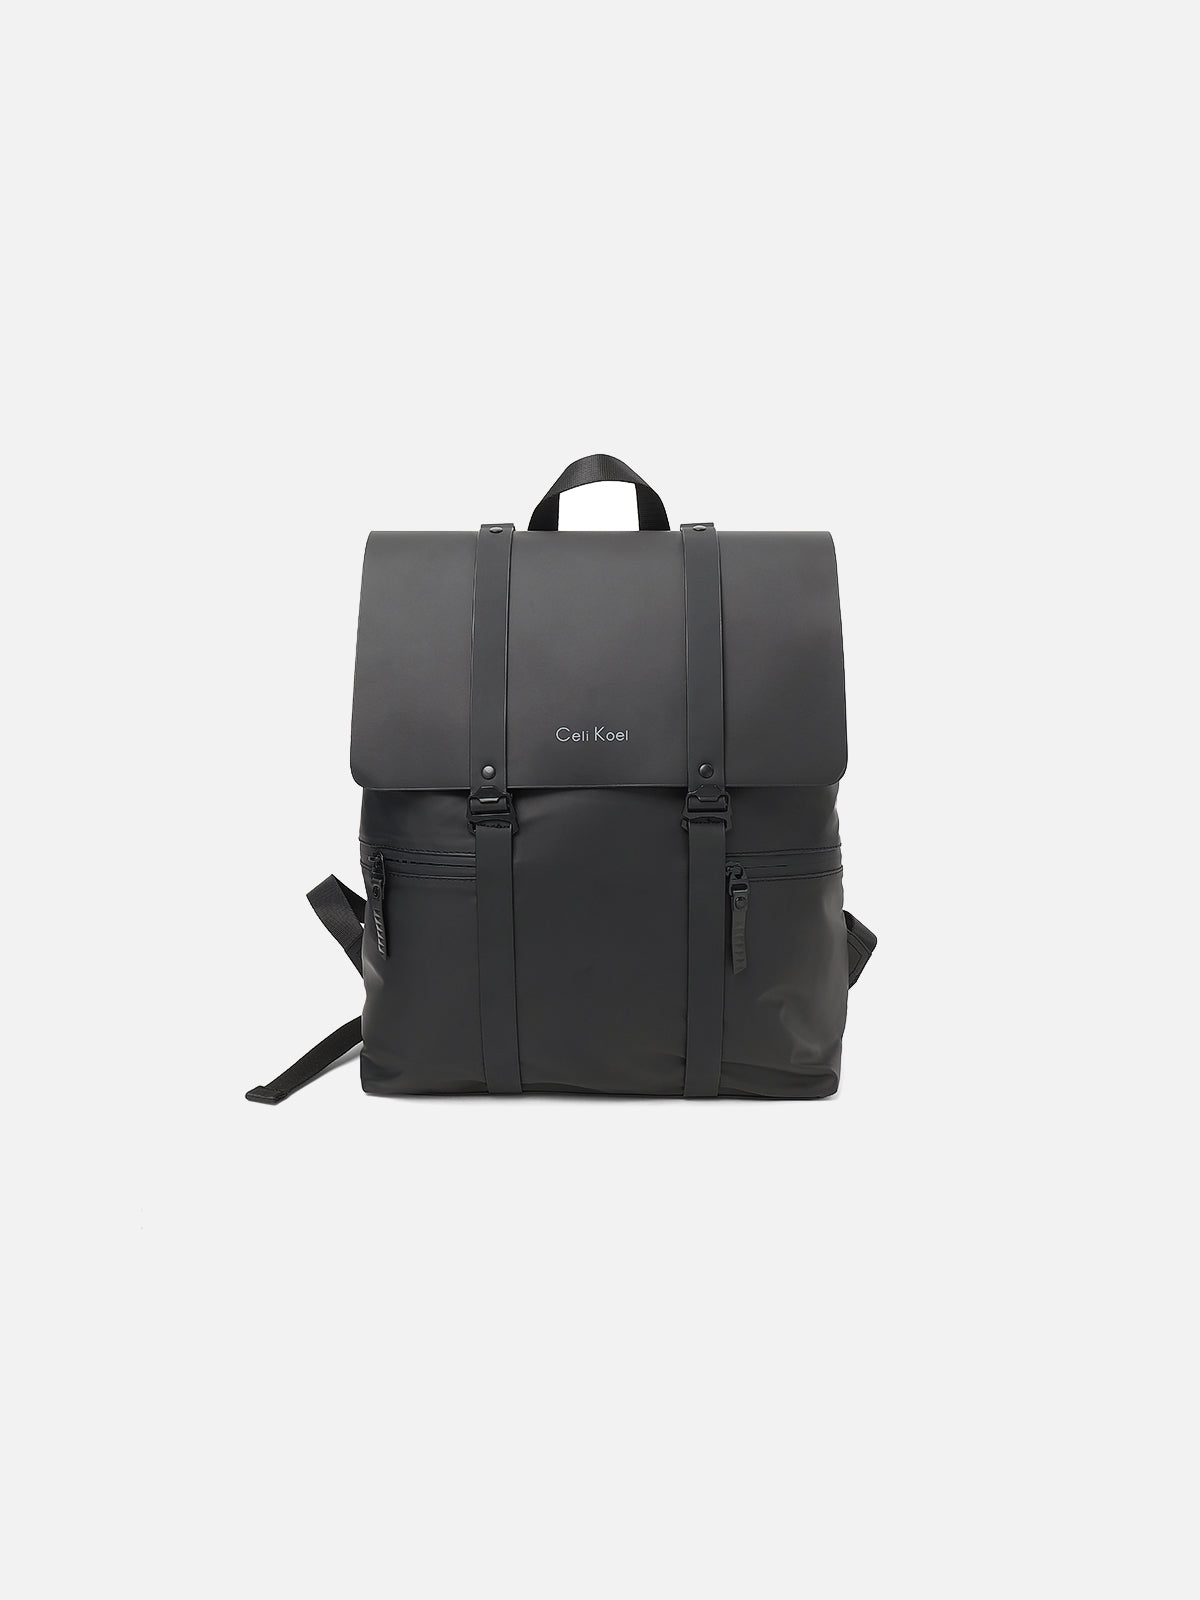 Black Backpack - FABG24-004